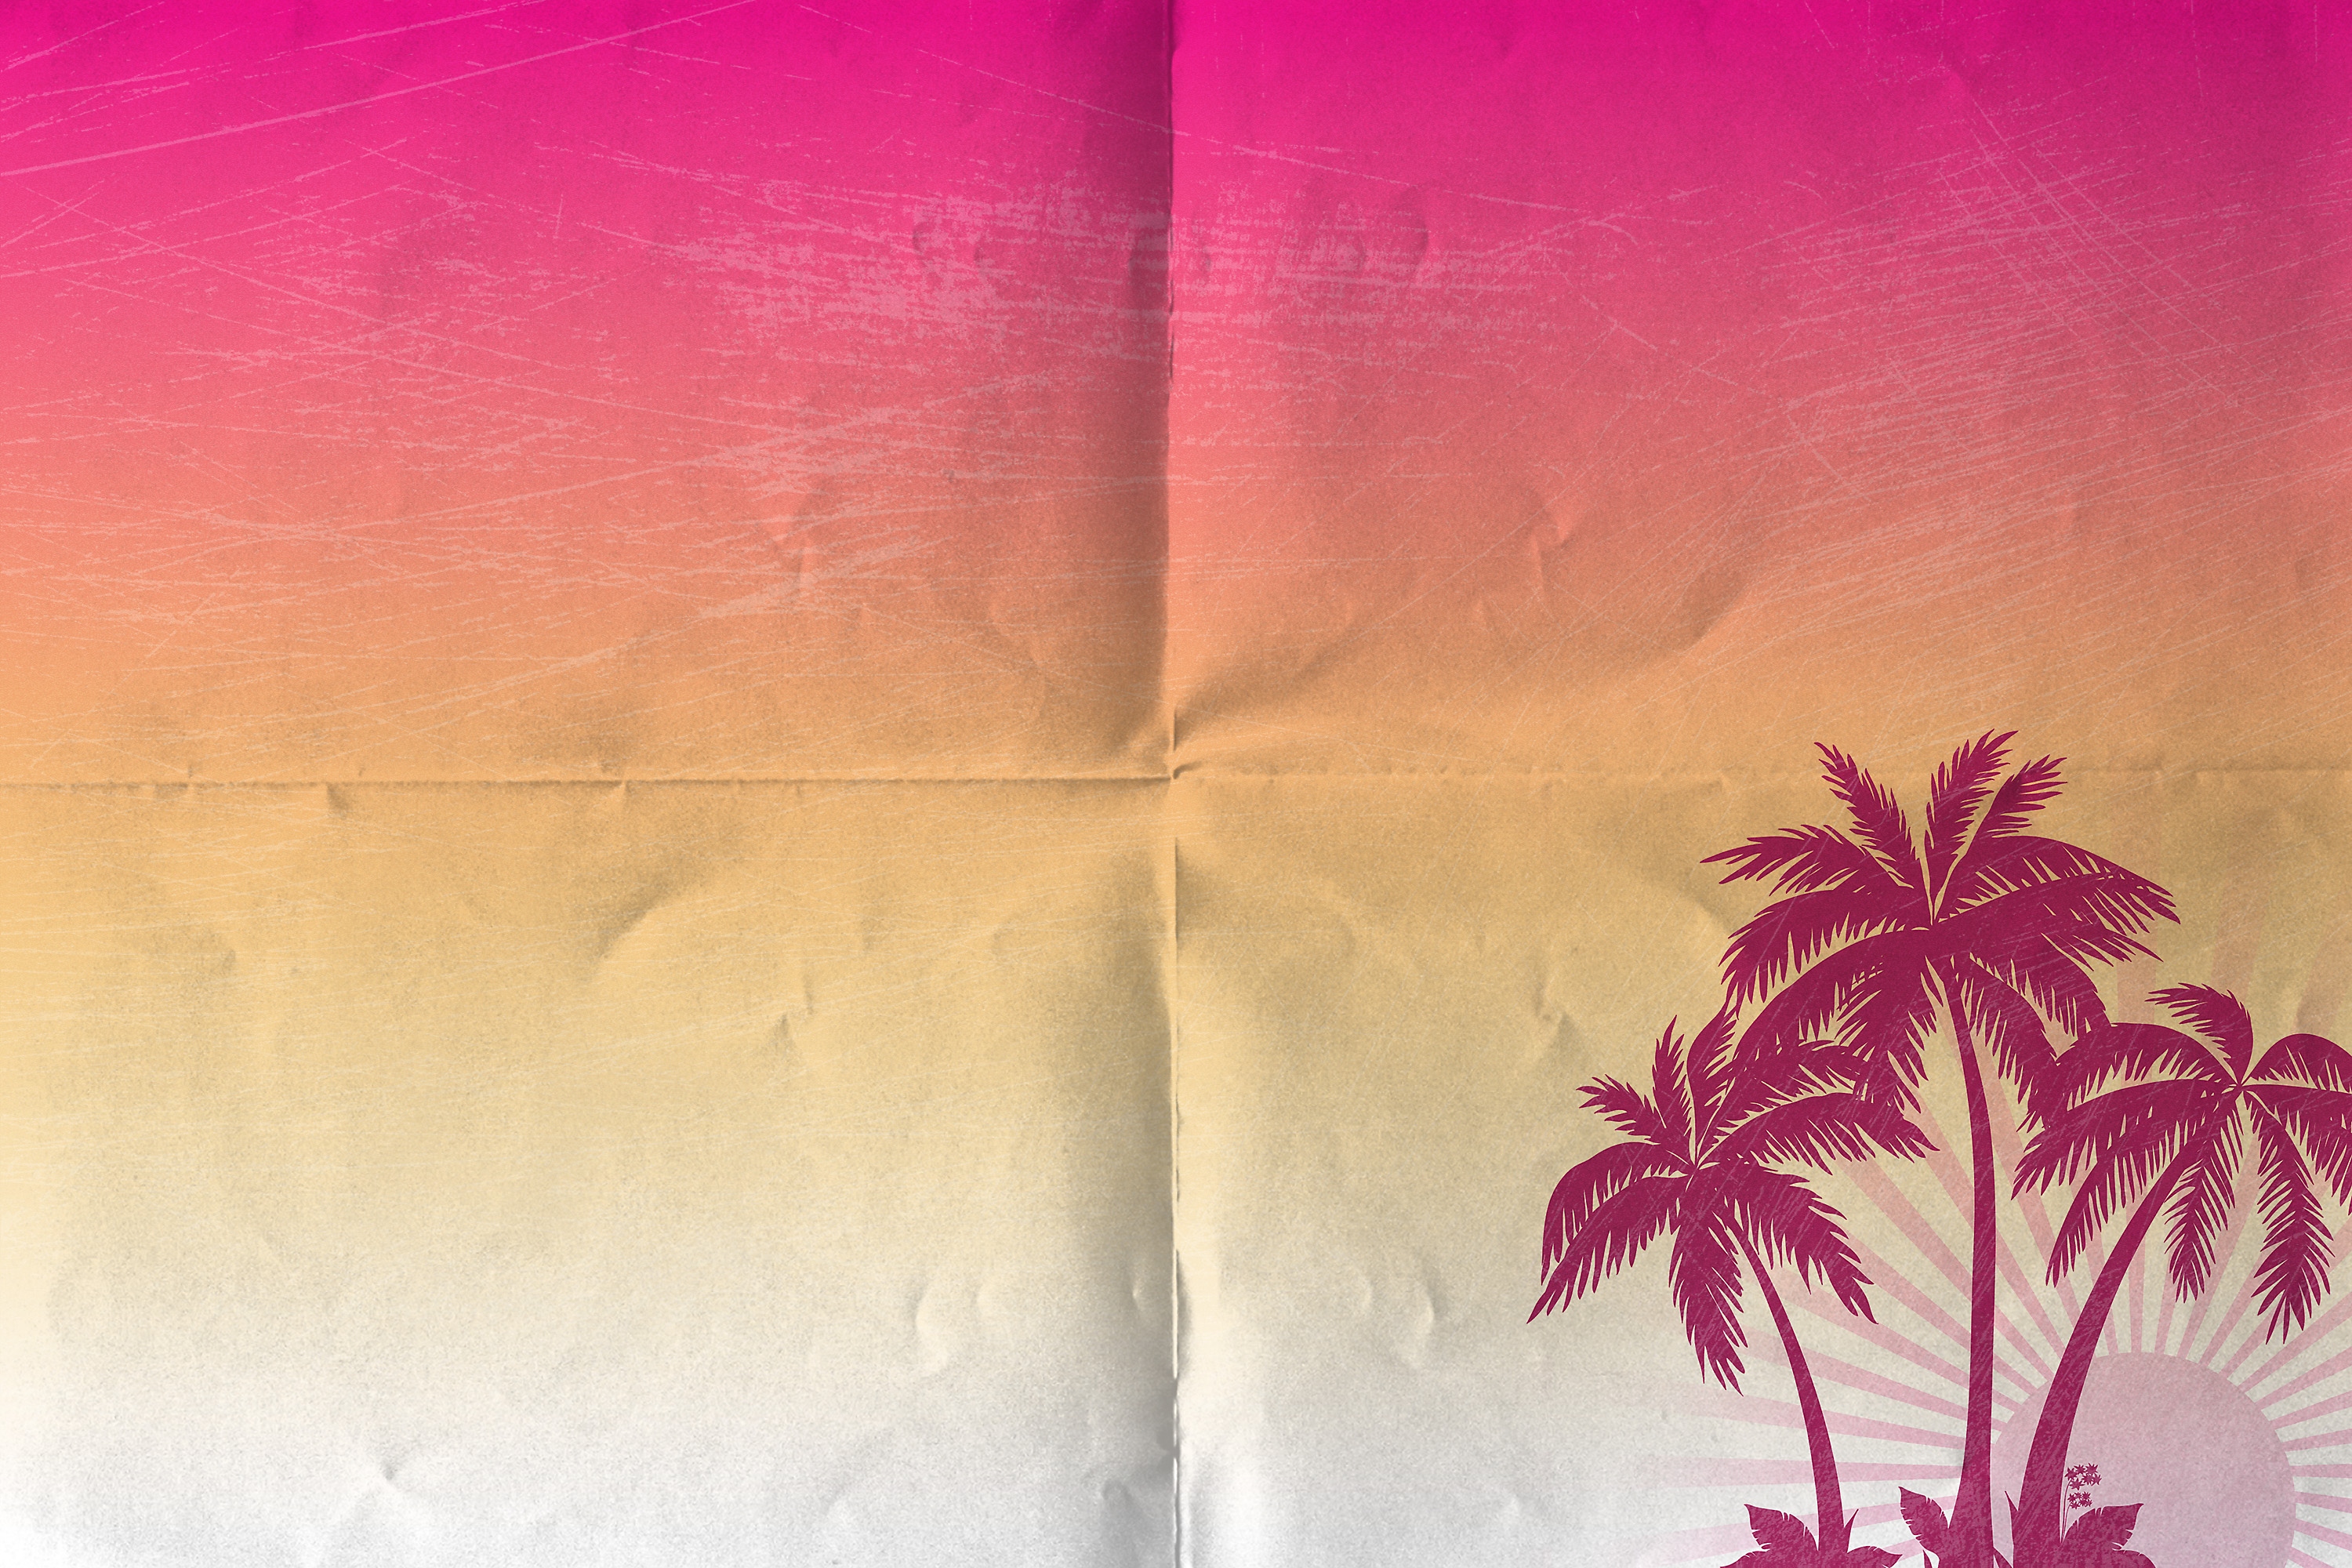 Caldera brochure background pattern - pink